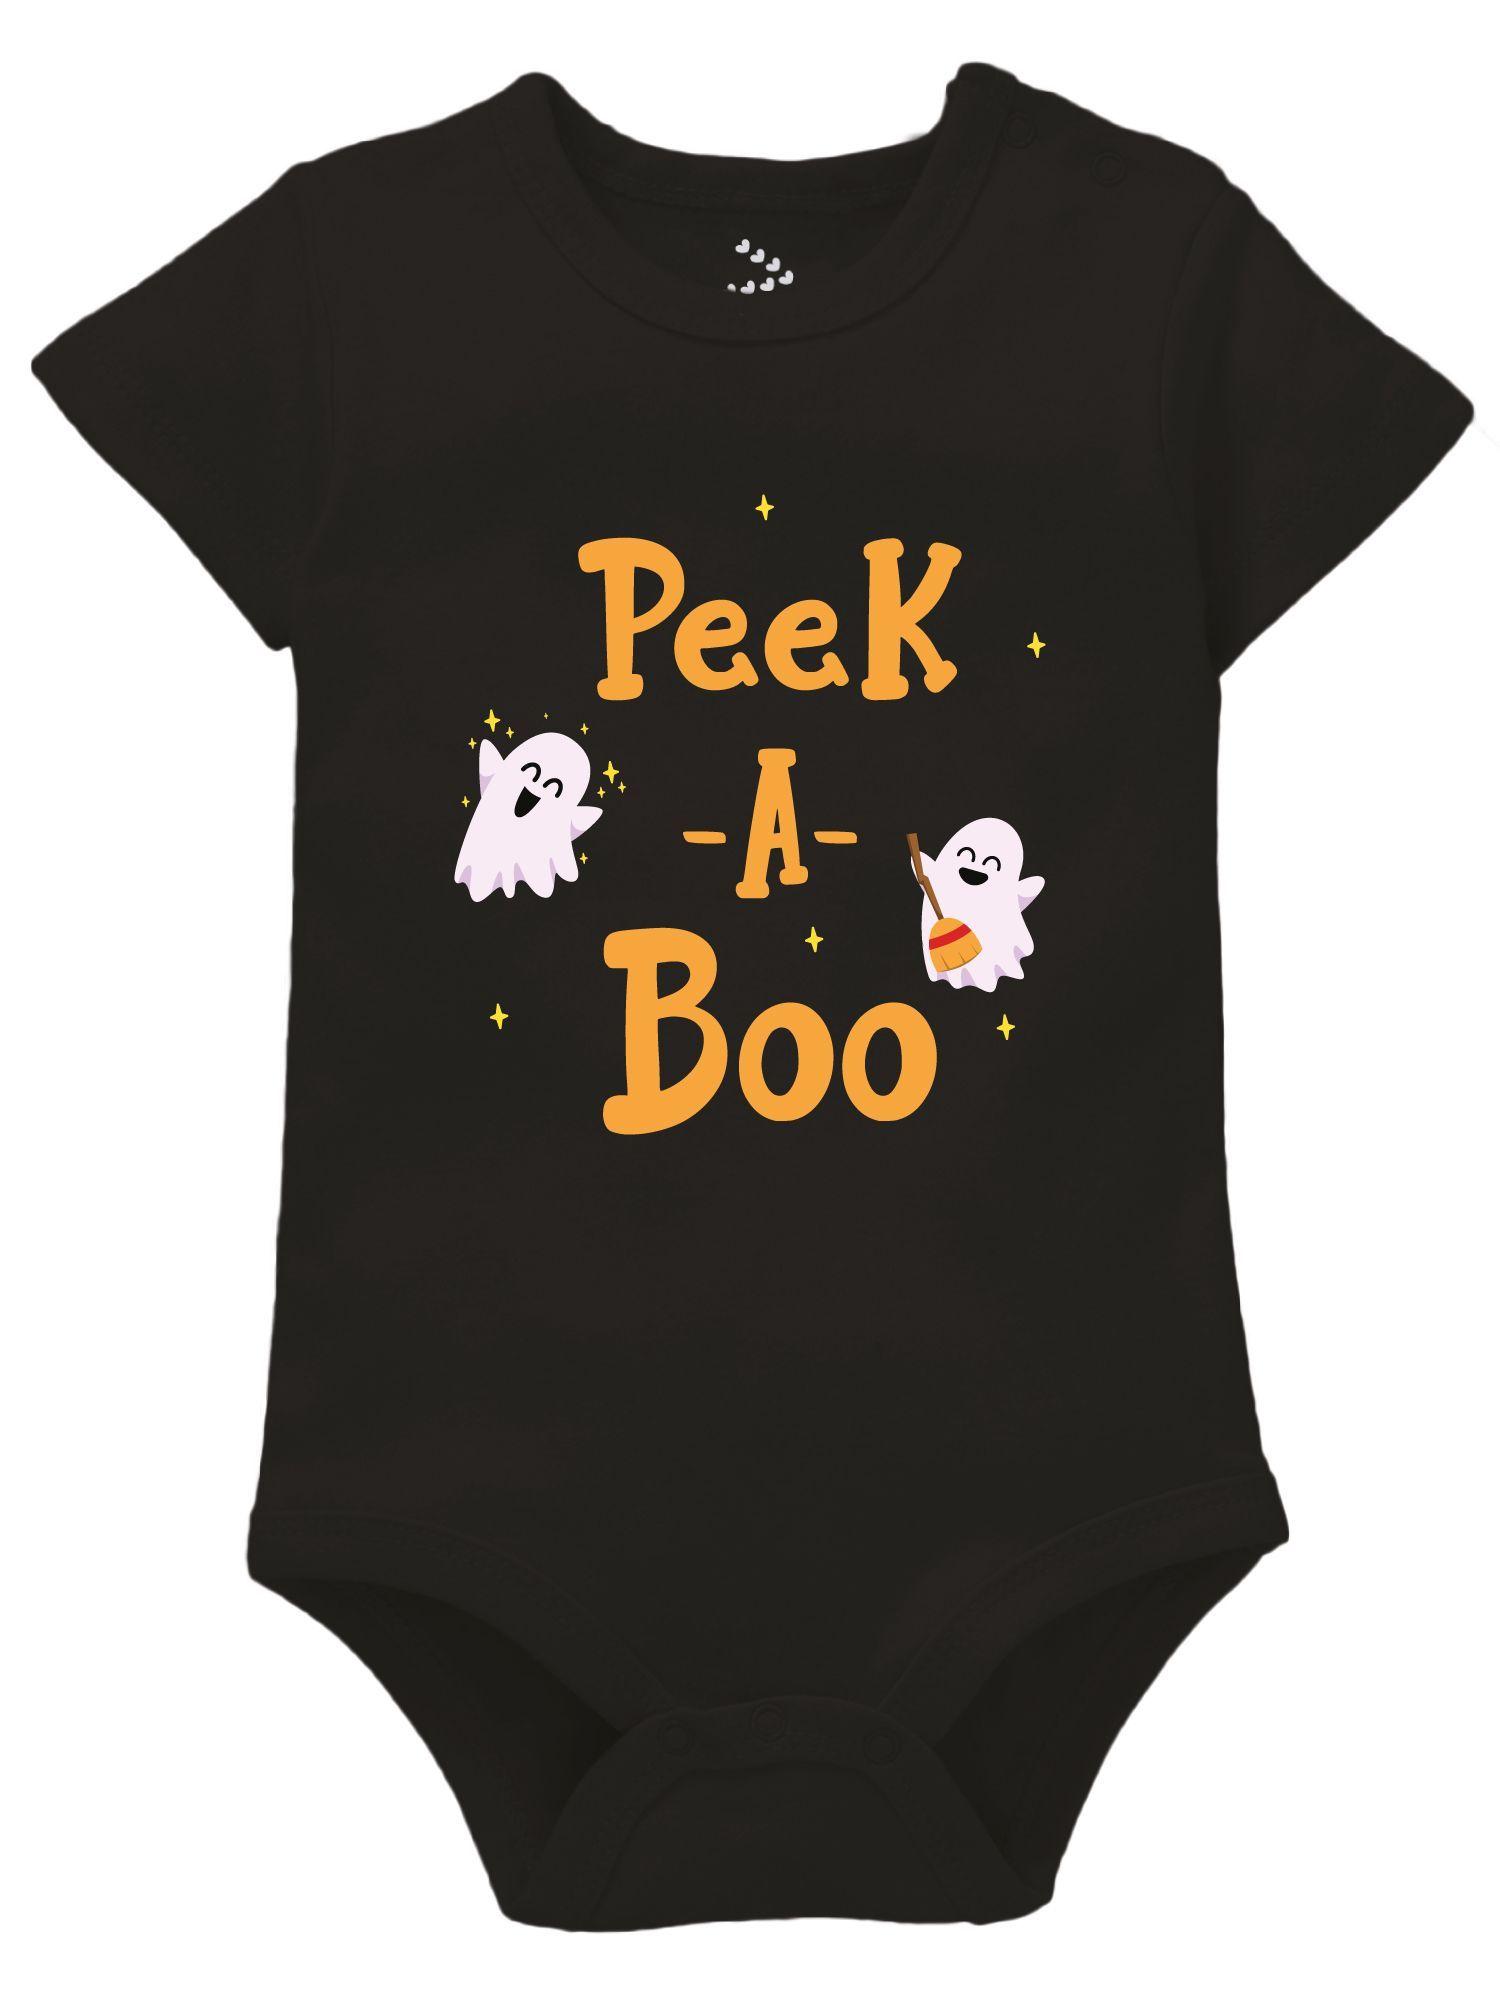 Peek-A-Boo Newborn Baby Romper Clothes Halloween Baby Theme